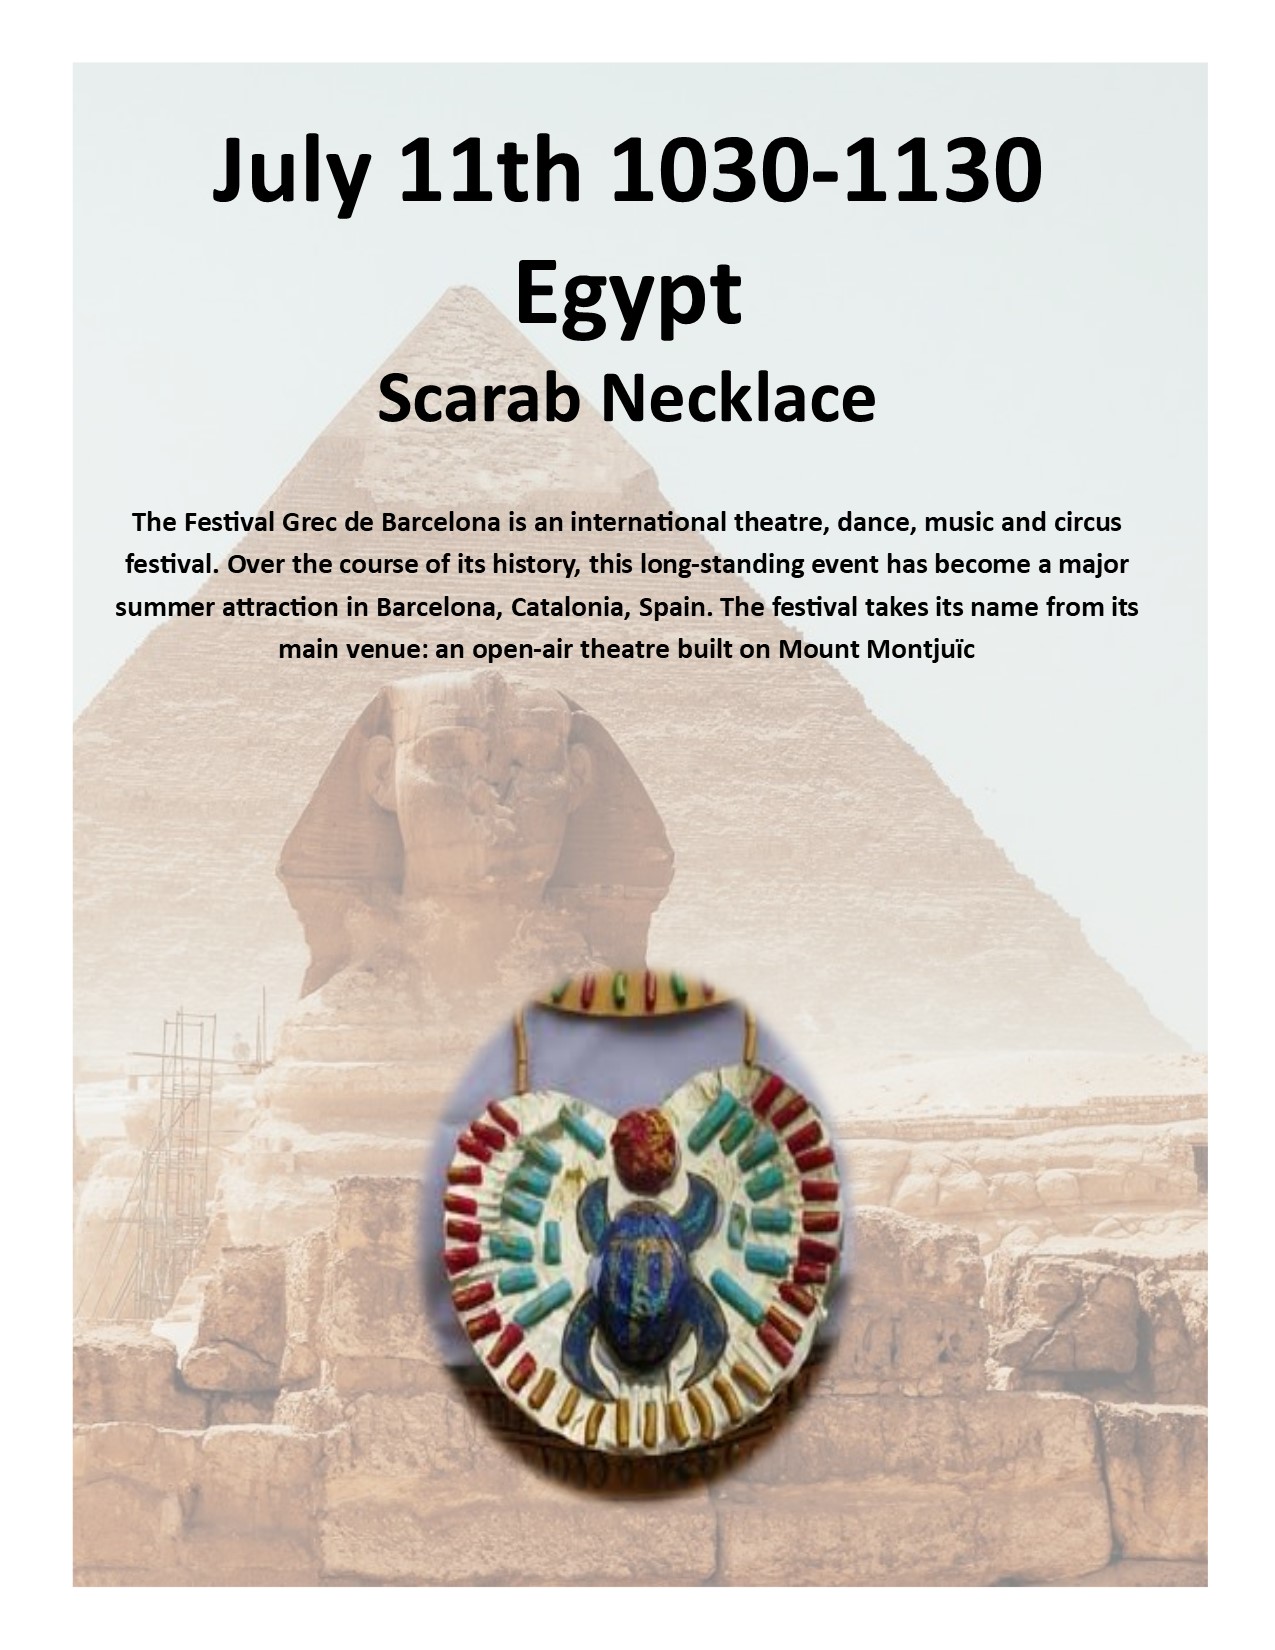 Scarab Necklace